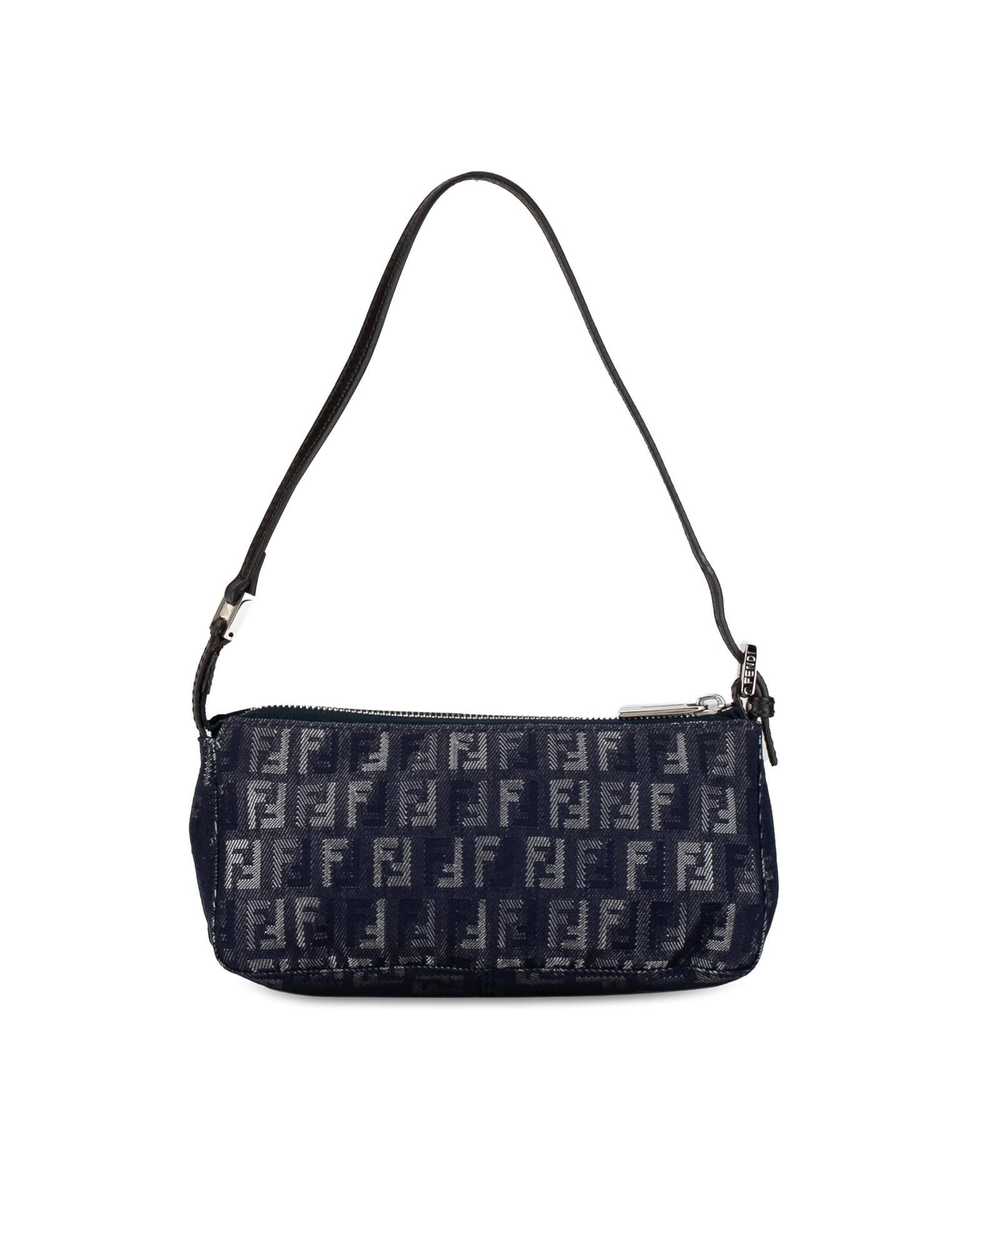 Fendi Denim Shoulder Bag with Top Zip Closure - image 3